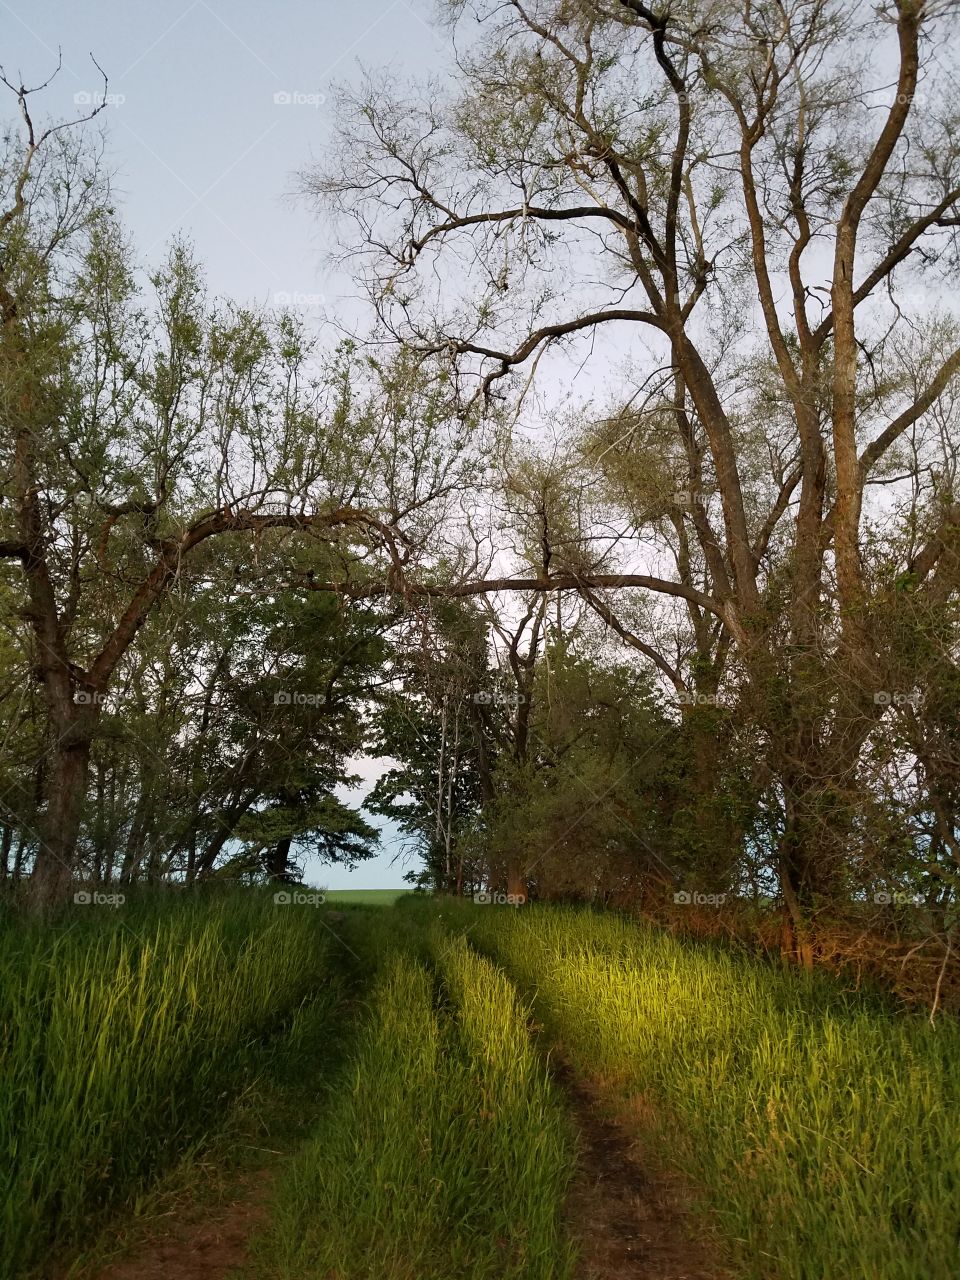 old wagon path